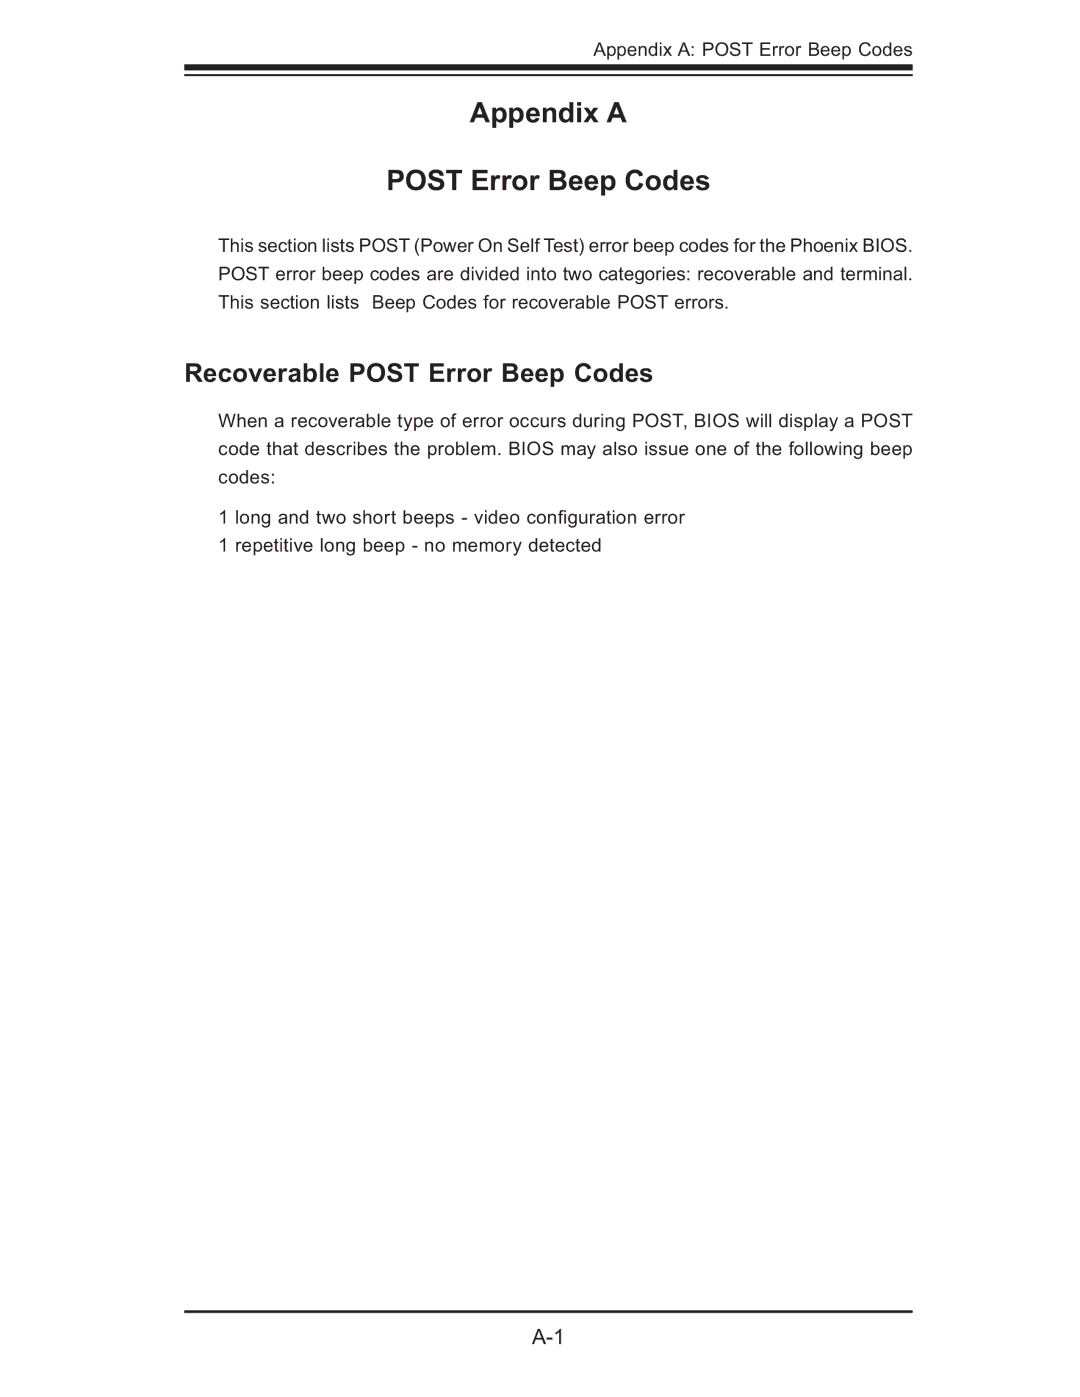 SUPER MICRO Computer X7DWE, Supero user manual Appendix a Post Error Beep Codes, Recoverable Post Error Beep Codes 